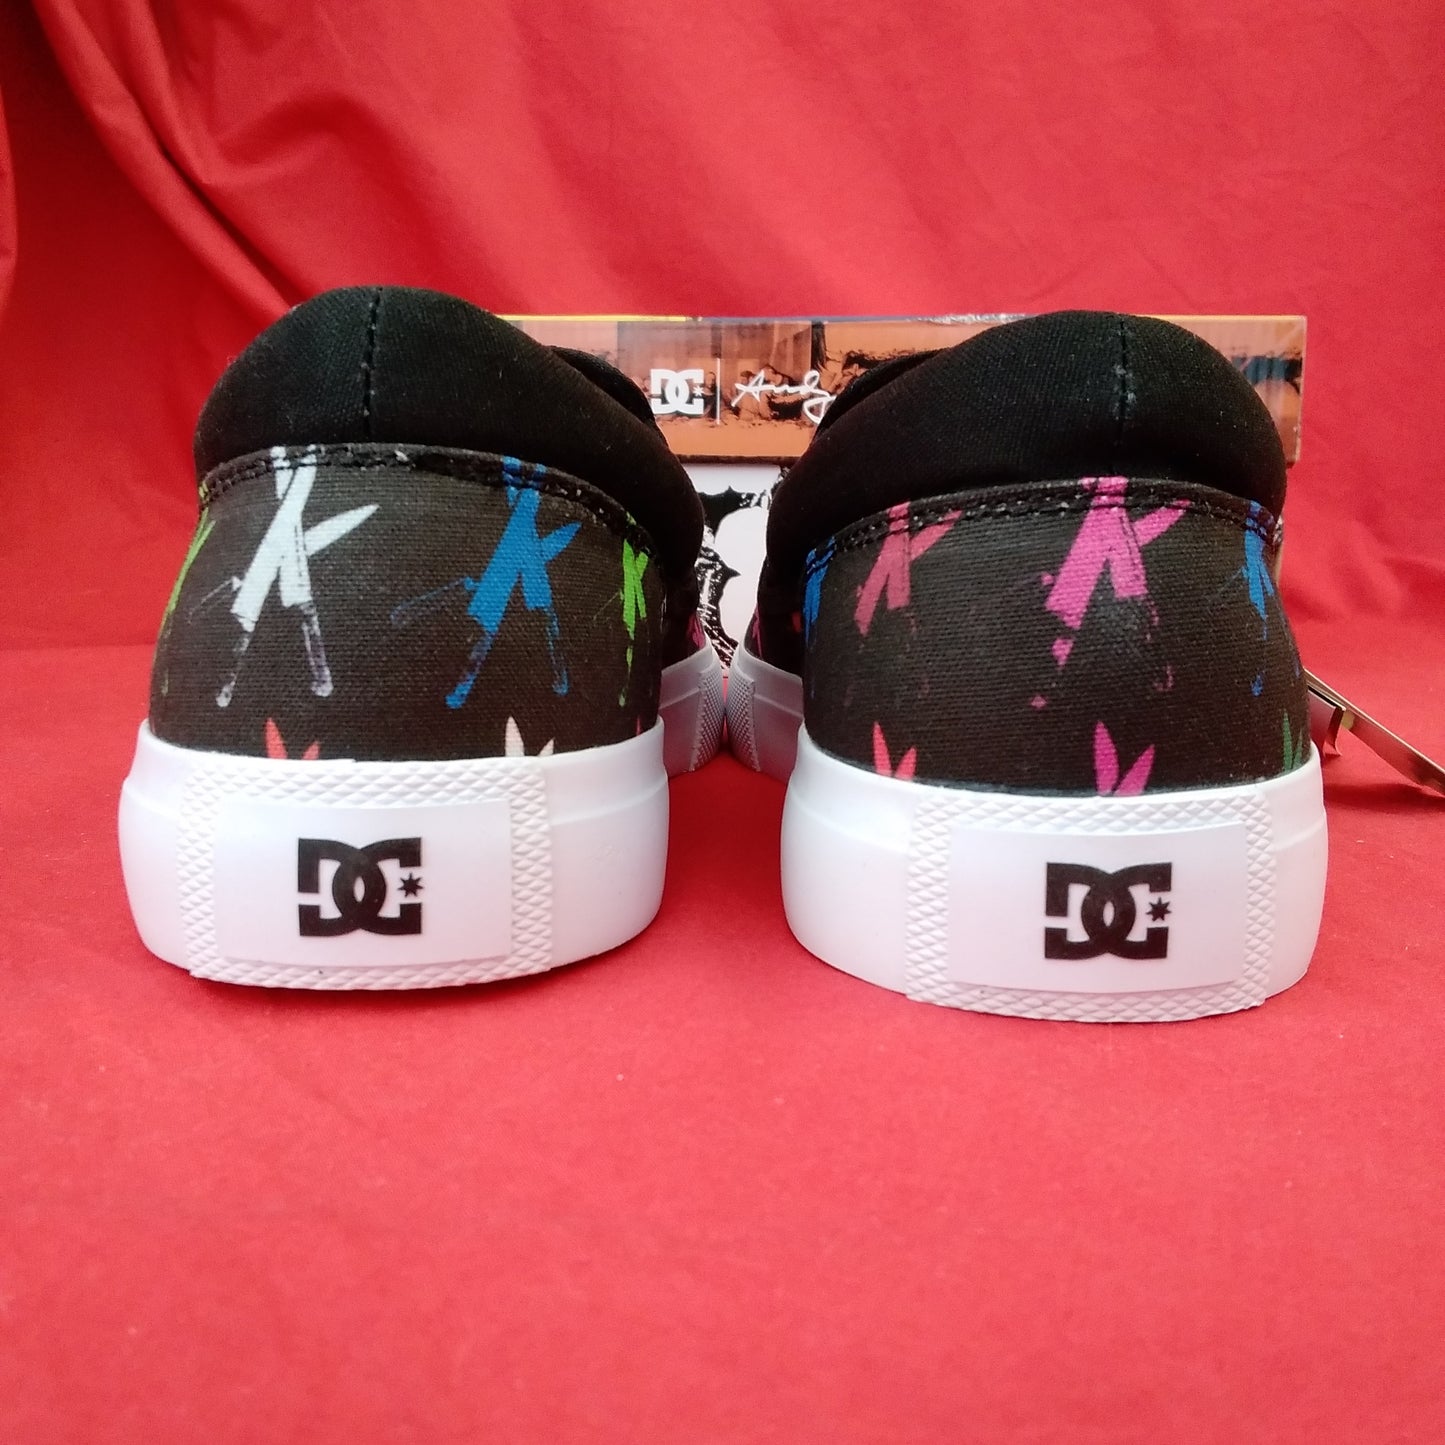 NIB - DC X Andy Warhol Men's Manual Slip-on Sneaker - Size: 10